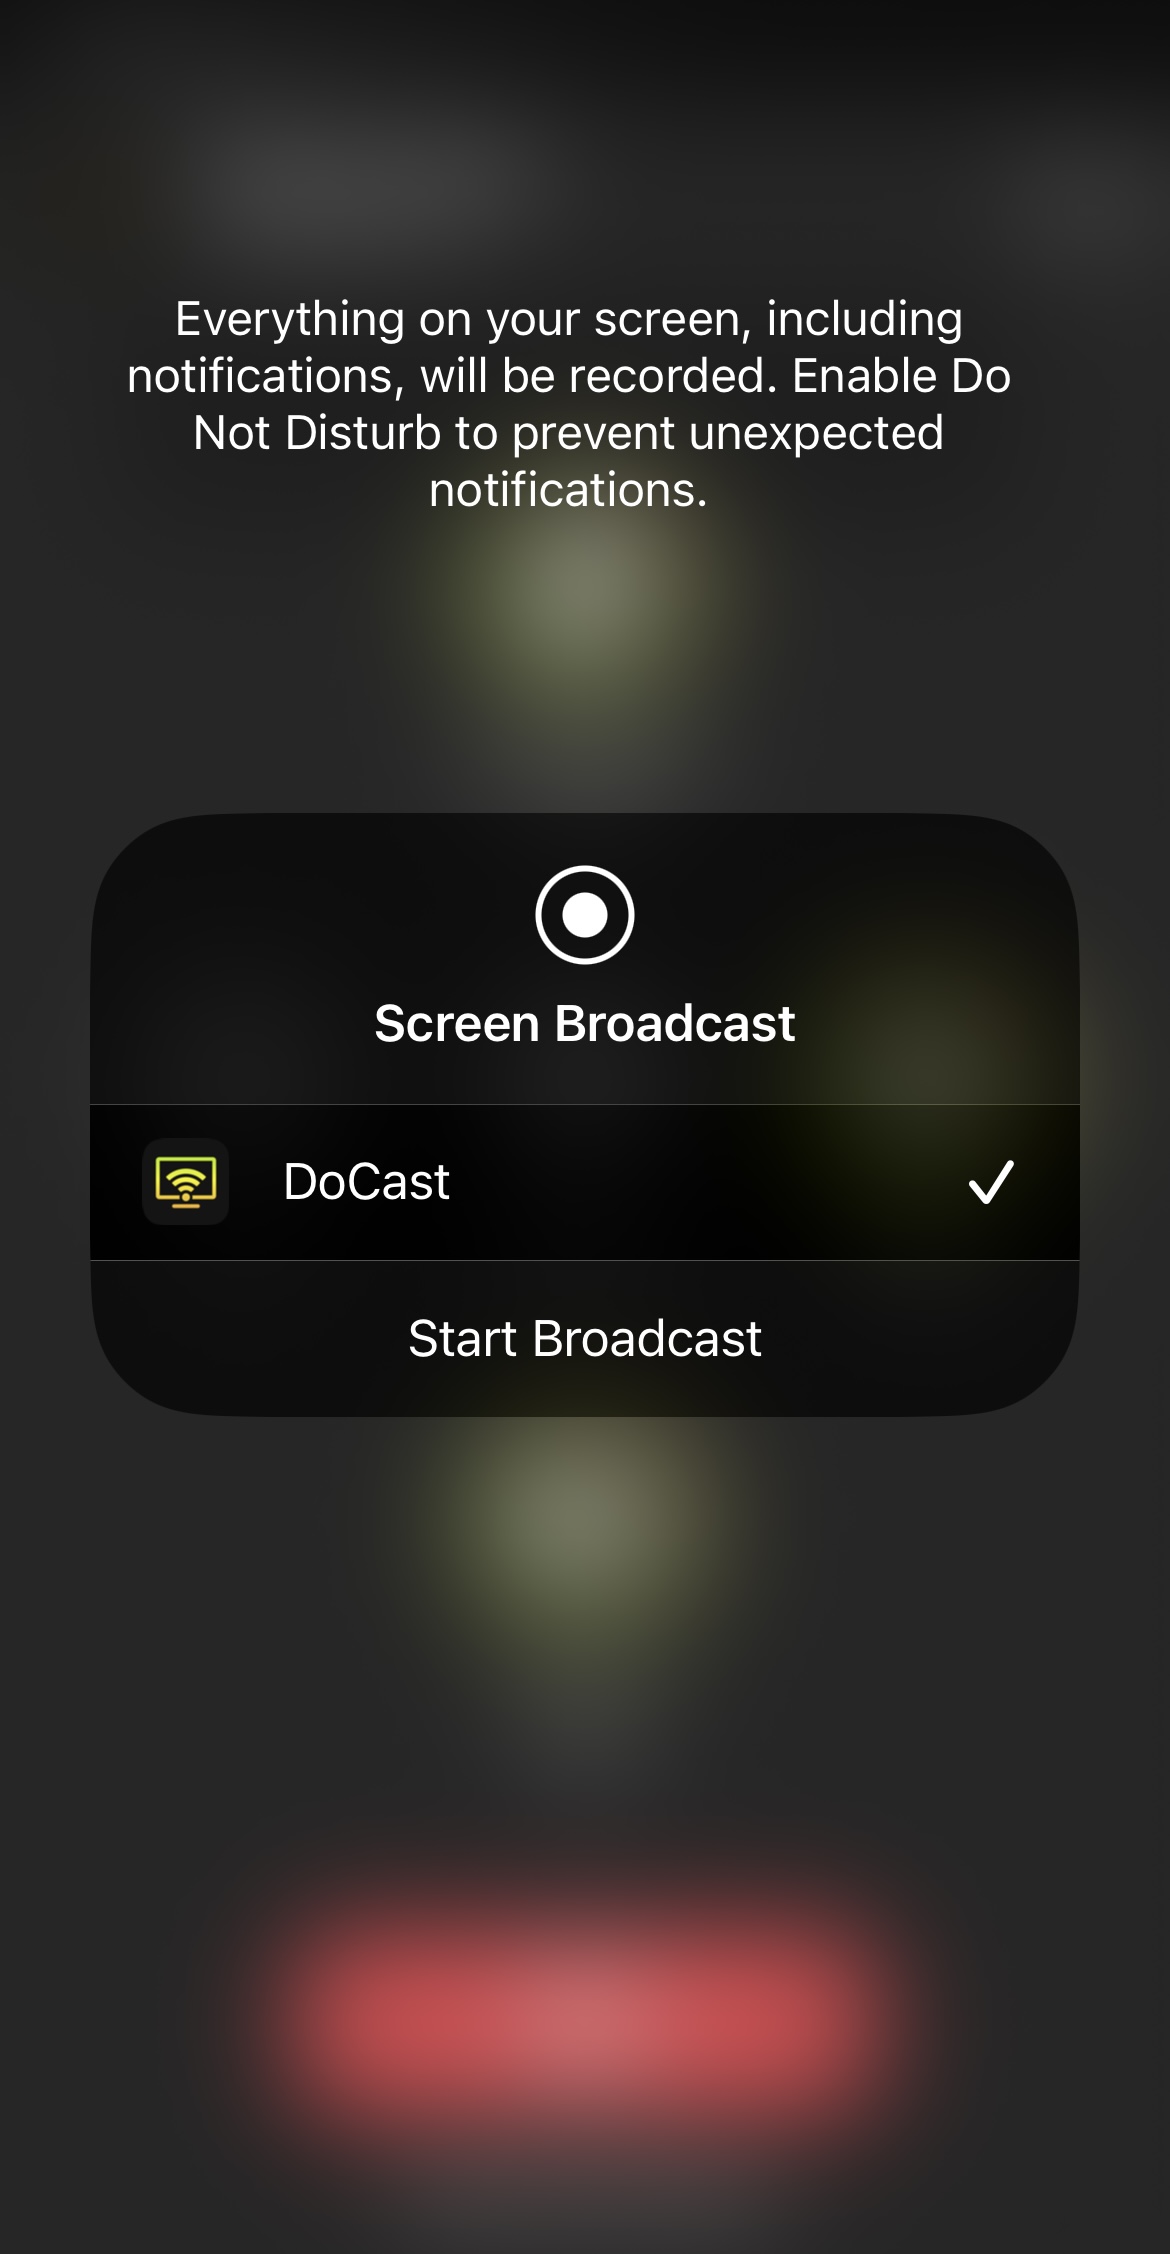 Broadcasting iPhone's screen via DoCast